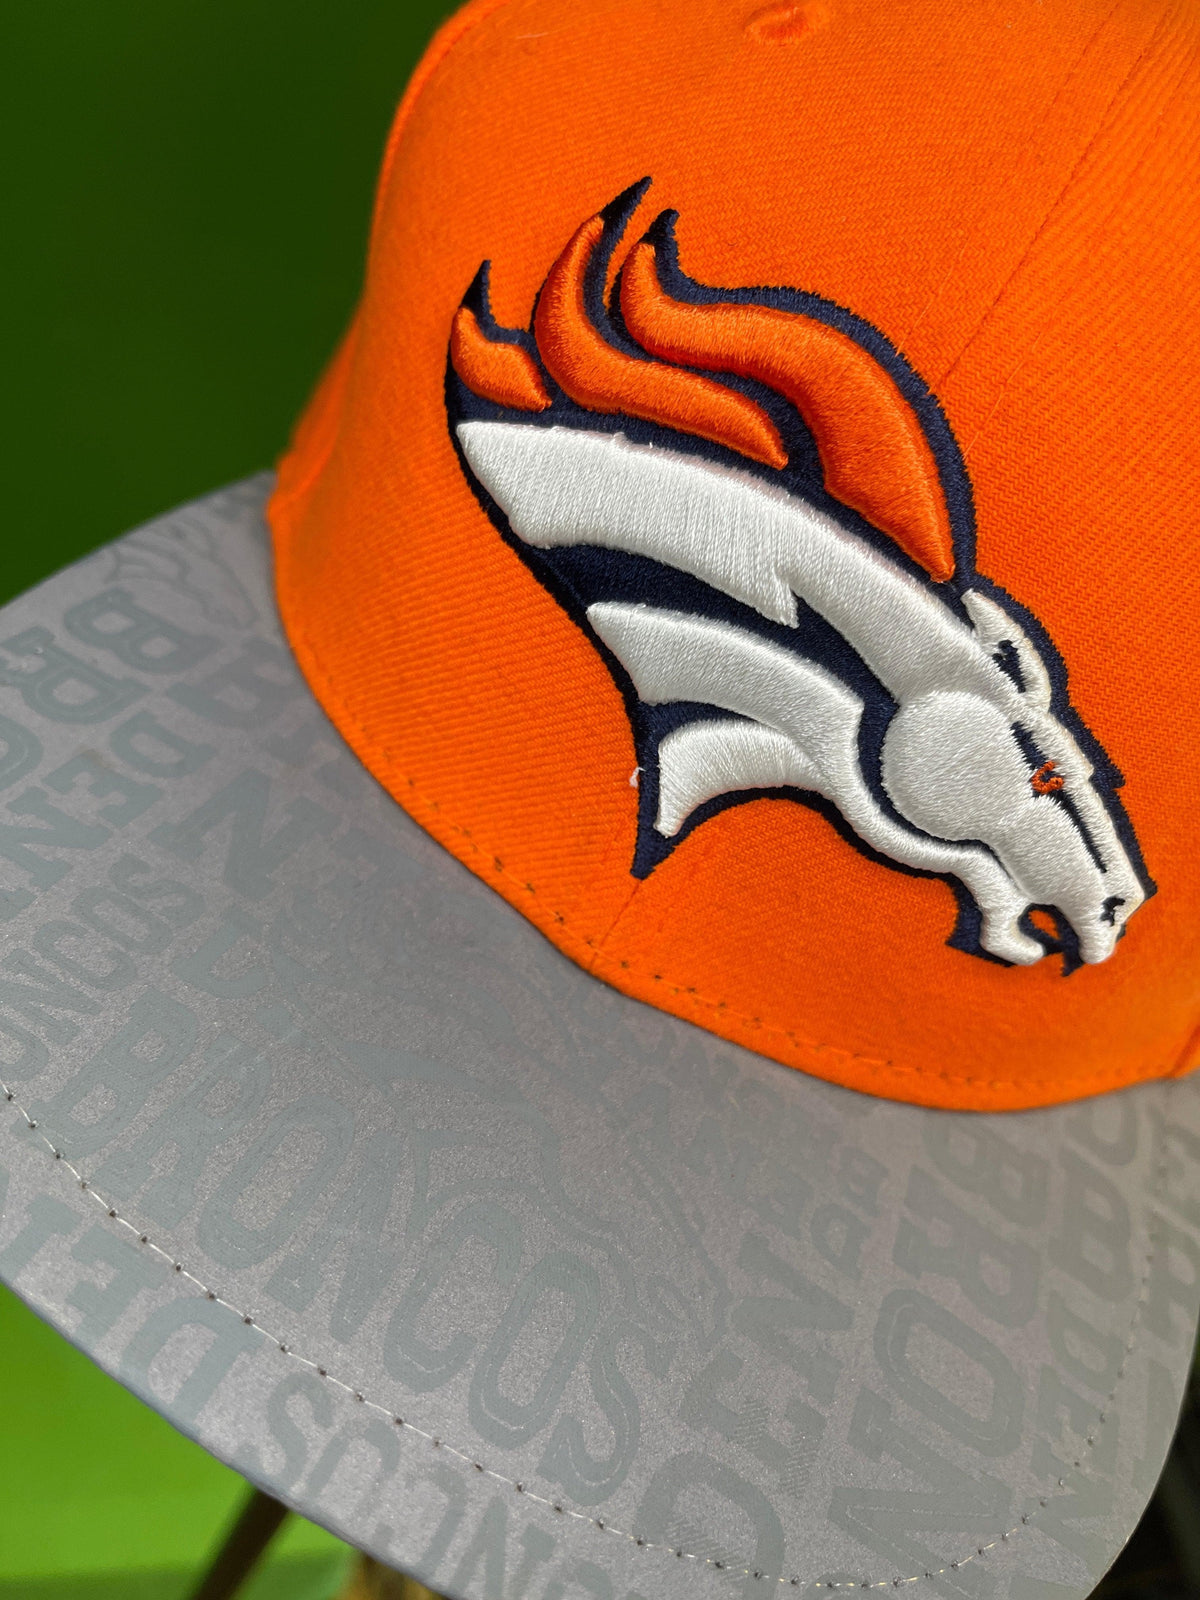 NFL Denver Broncos New Era 59FIFTY Baseball Cap/Hat 7-3/8 NWT